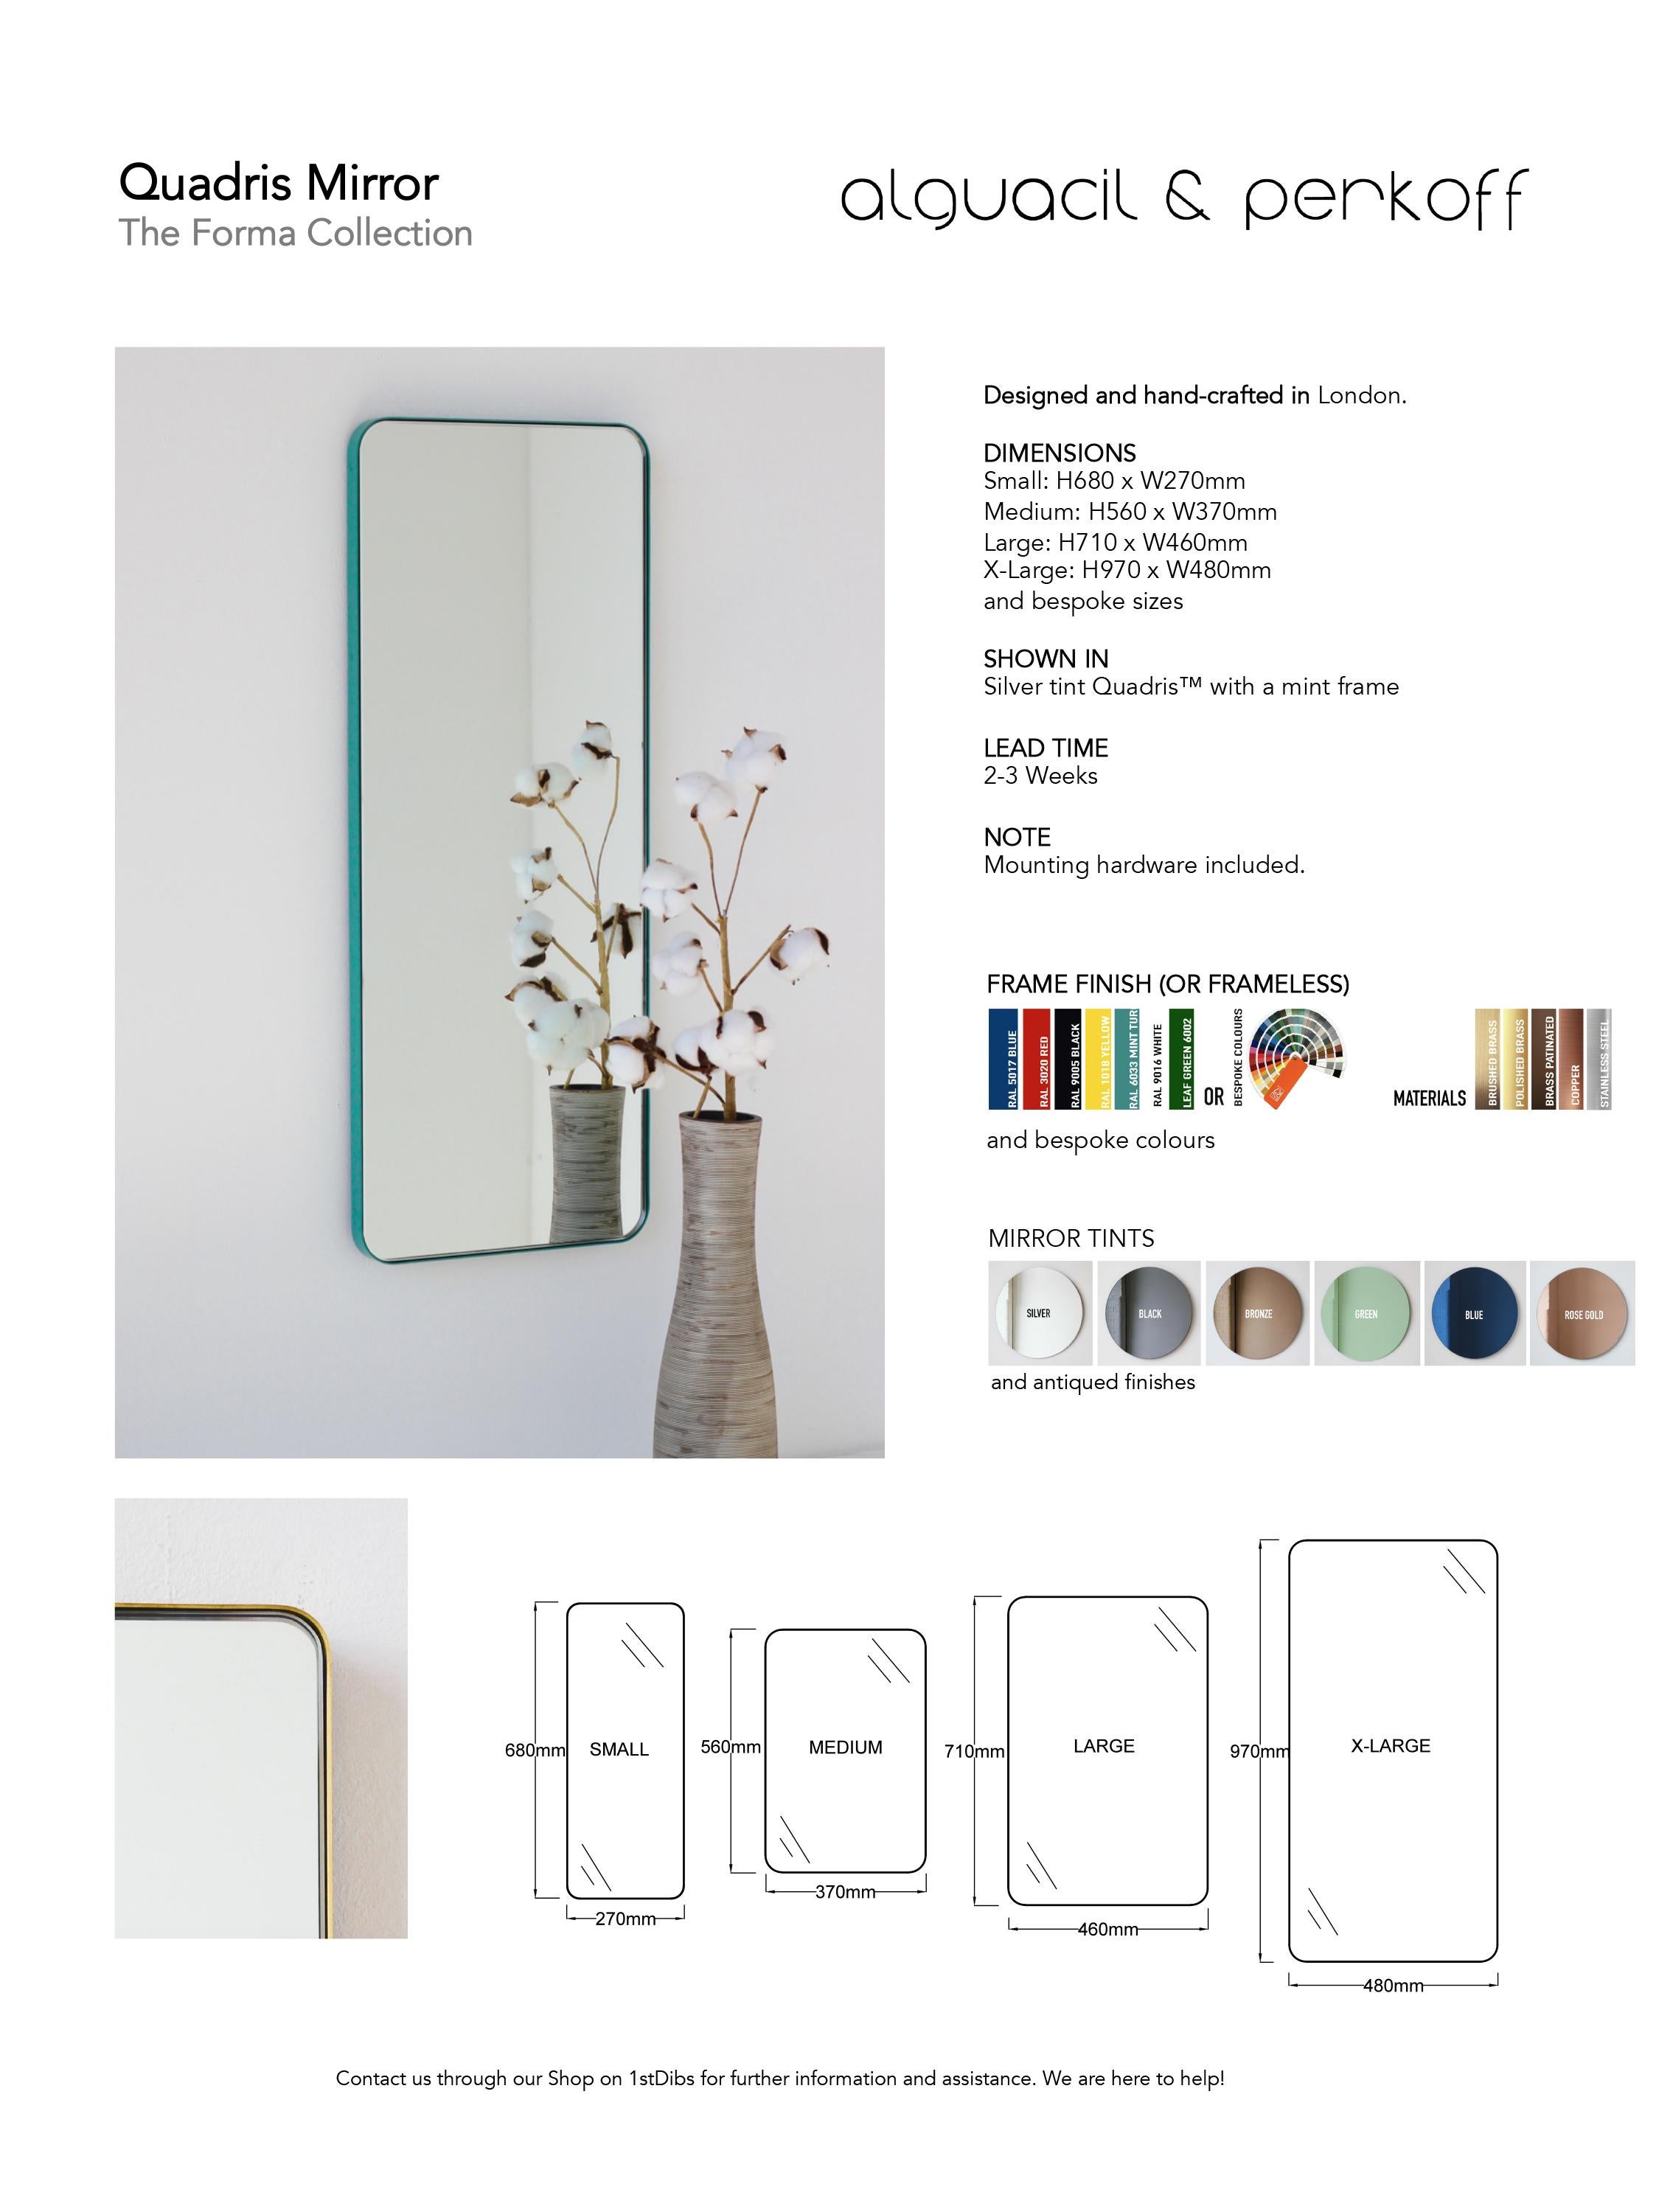 Quadris Rectangular Rose Gold Contemporary Mirror with Copper Frame, XL For Sale 5